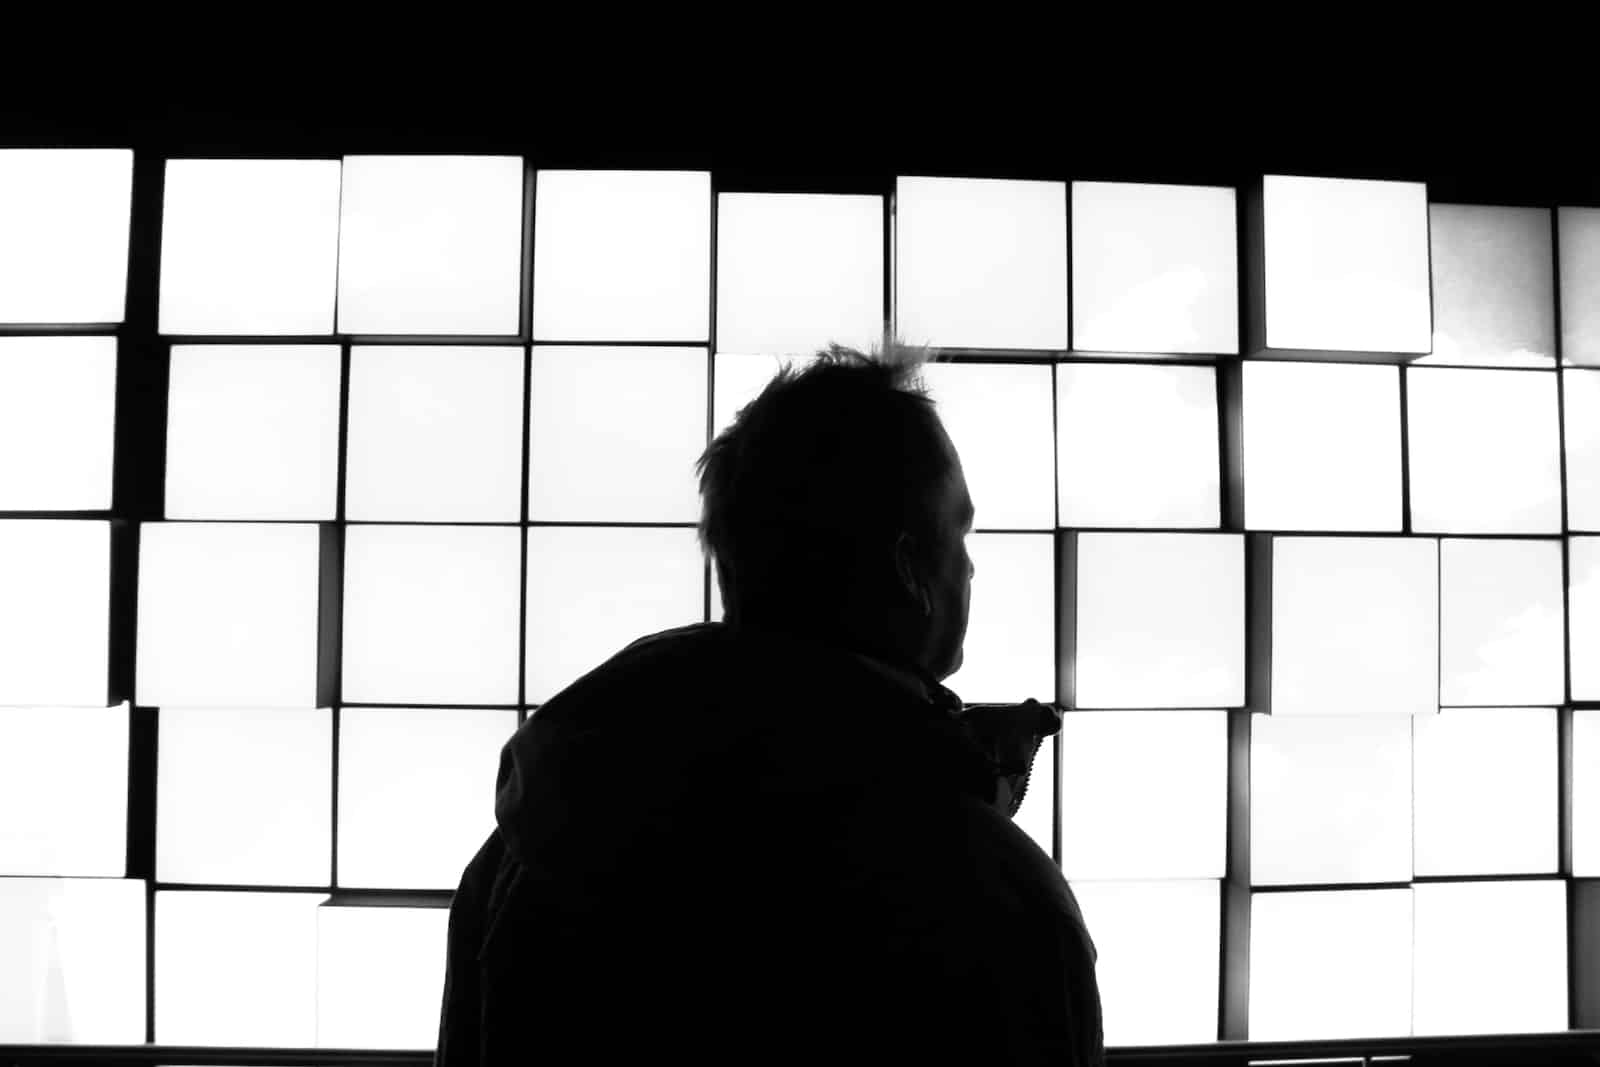 silhouette of man standing near window